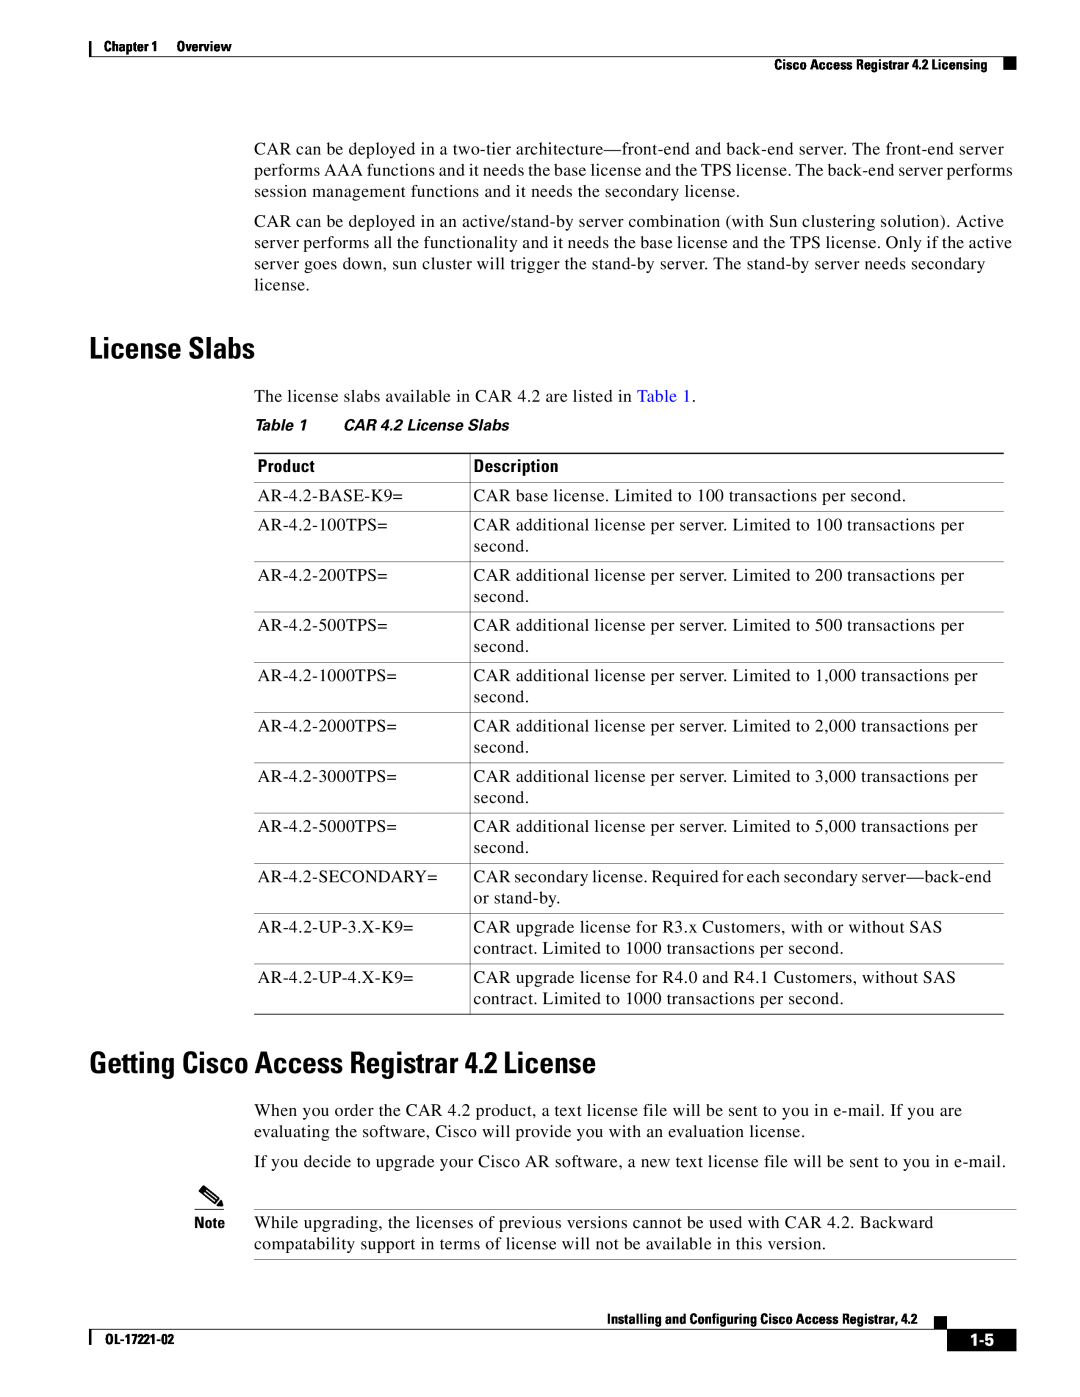 Cisco Systems manual License Slabs, Getting Cisco Access Registrar 4.2 License, Product, Description 